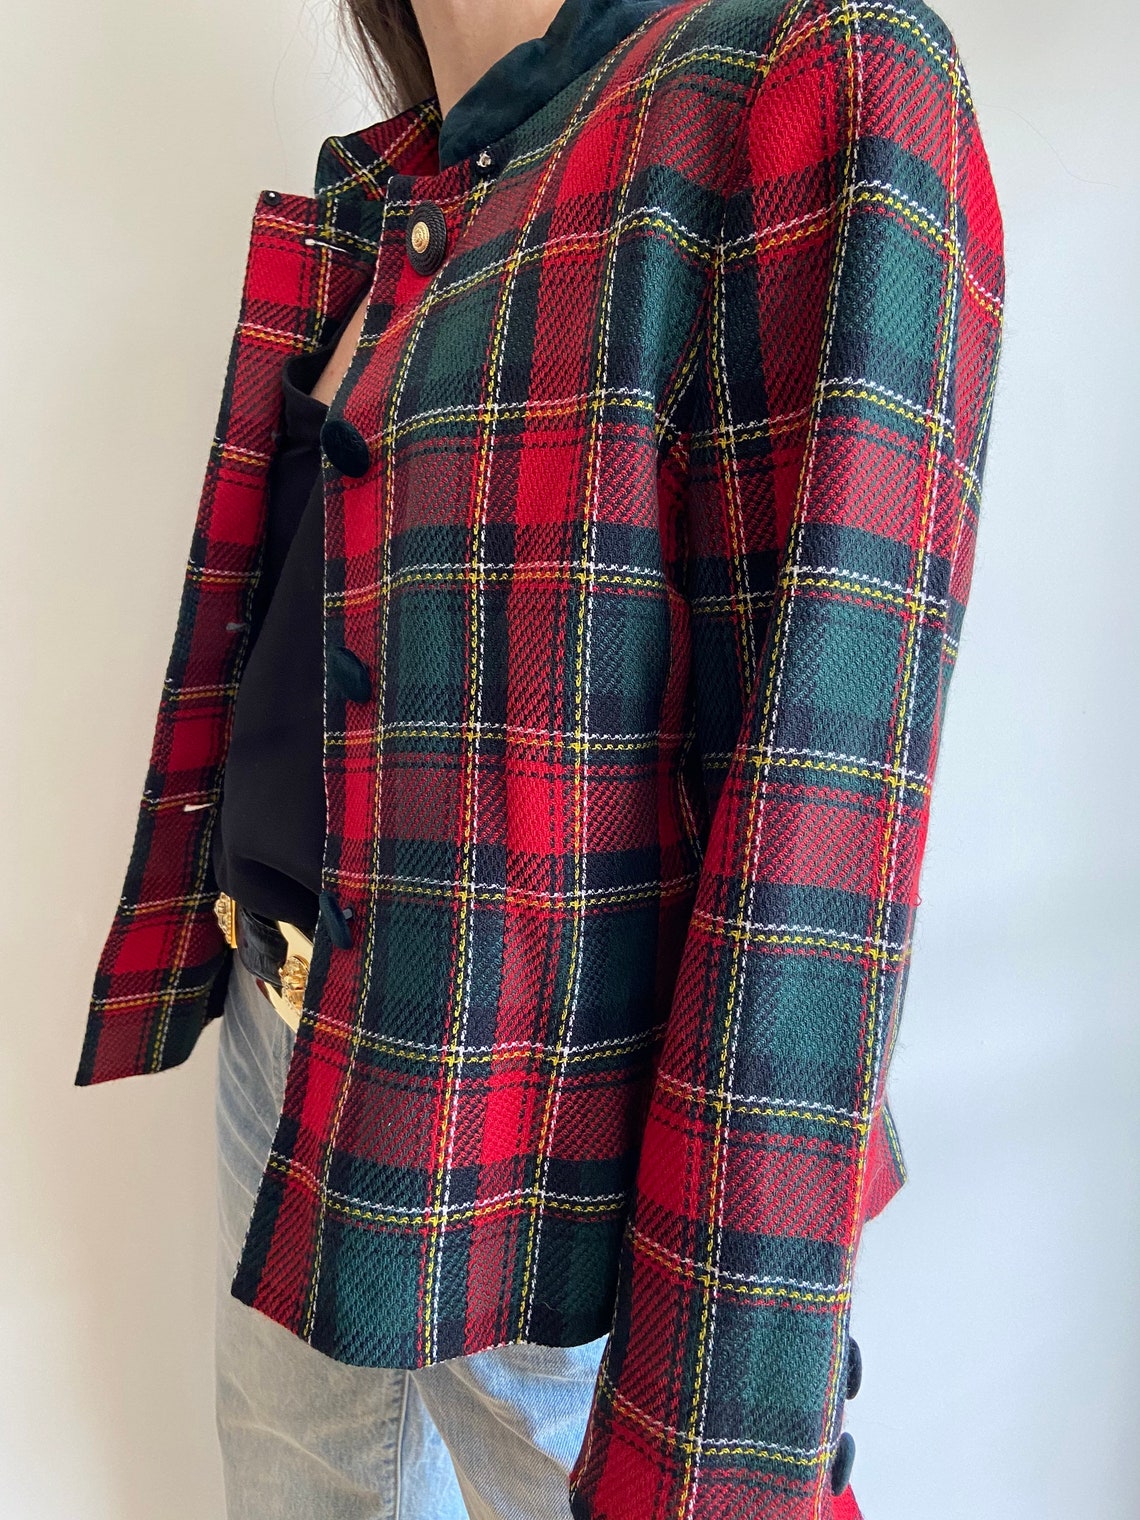 Vintage plaid tartan wool jacket / high neck velvet collar red | Etsy